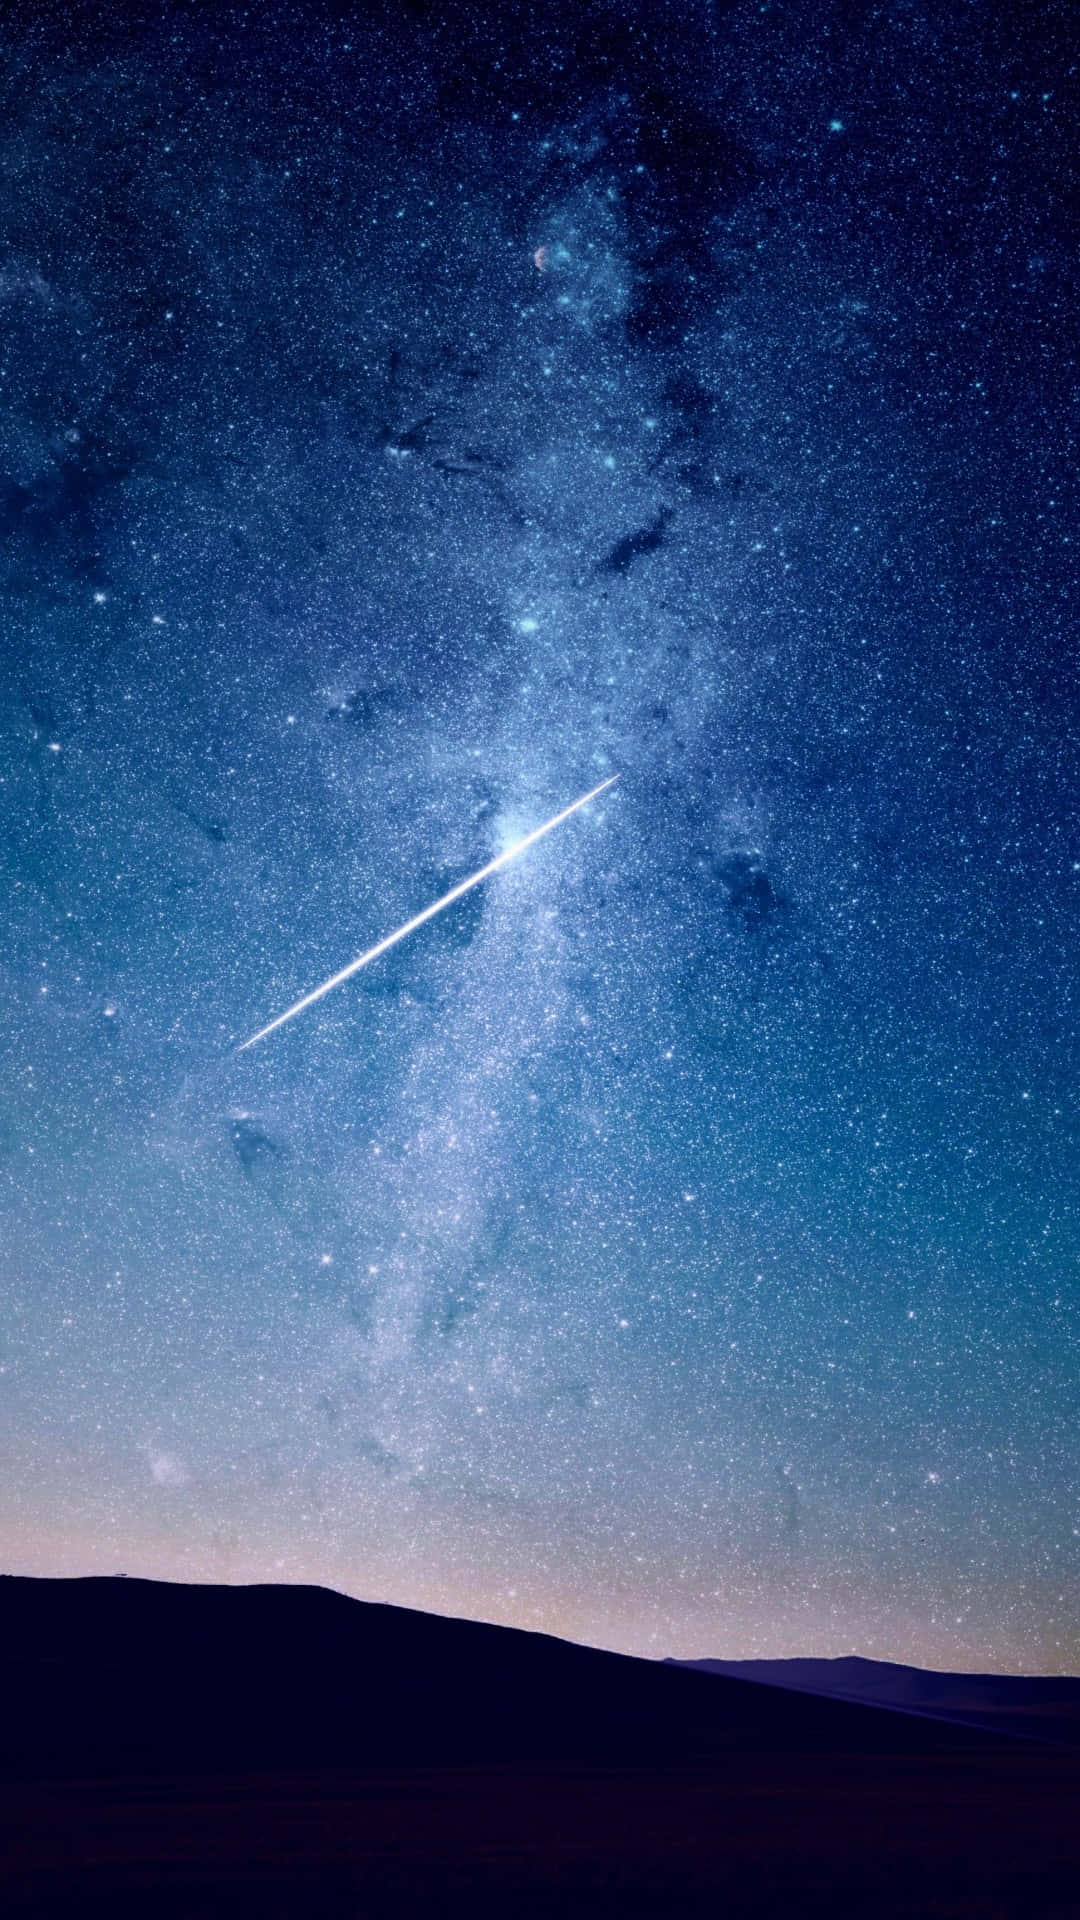 Stargazing beneath the serene night sky